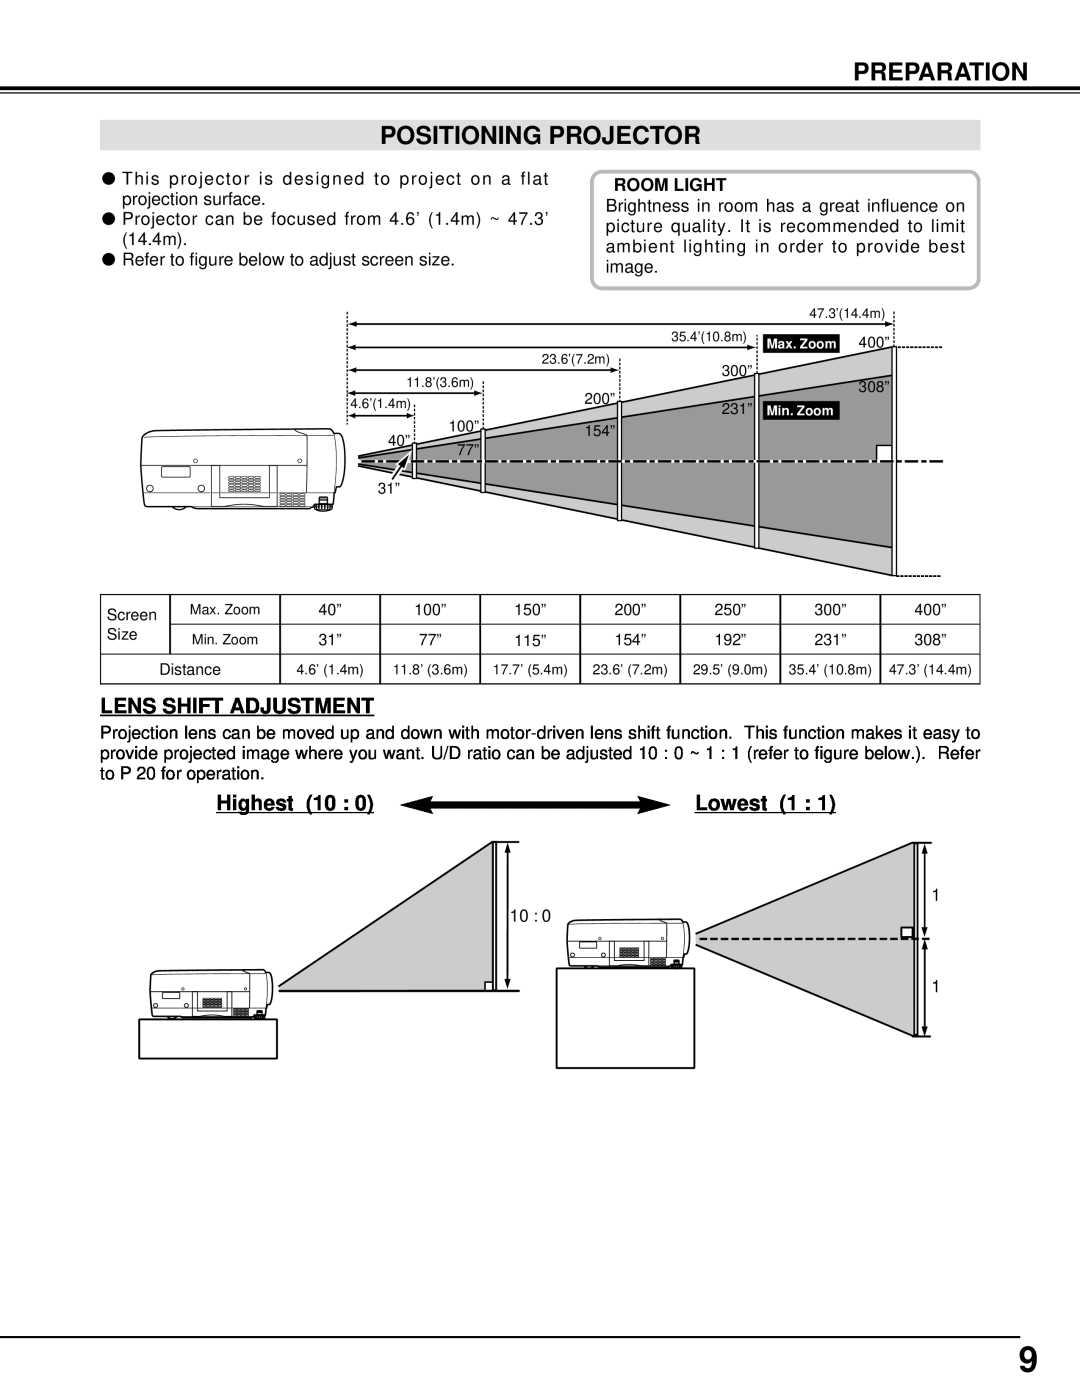 Eiki LC-X986 instruction manual Preparation Positioning Projector, Lens Shift Adjustment, Highest, Lowest 